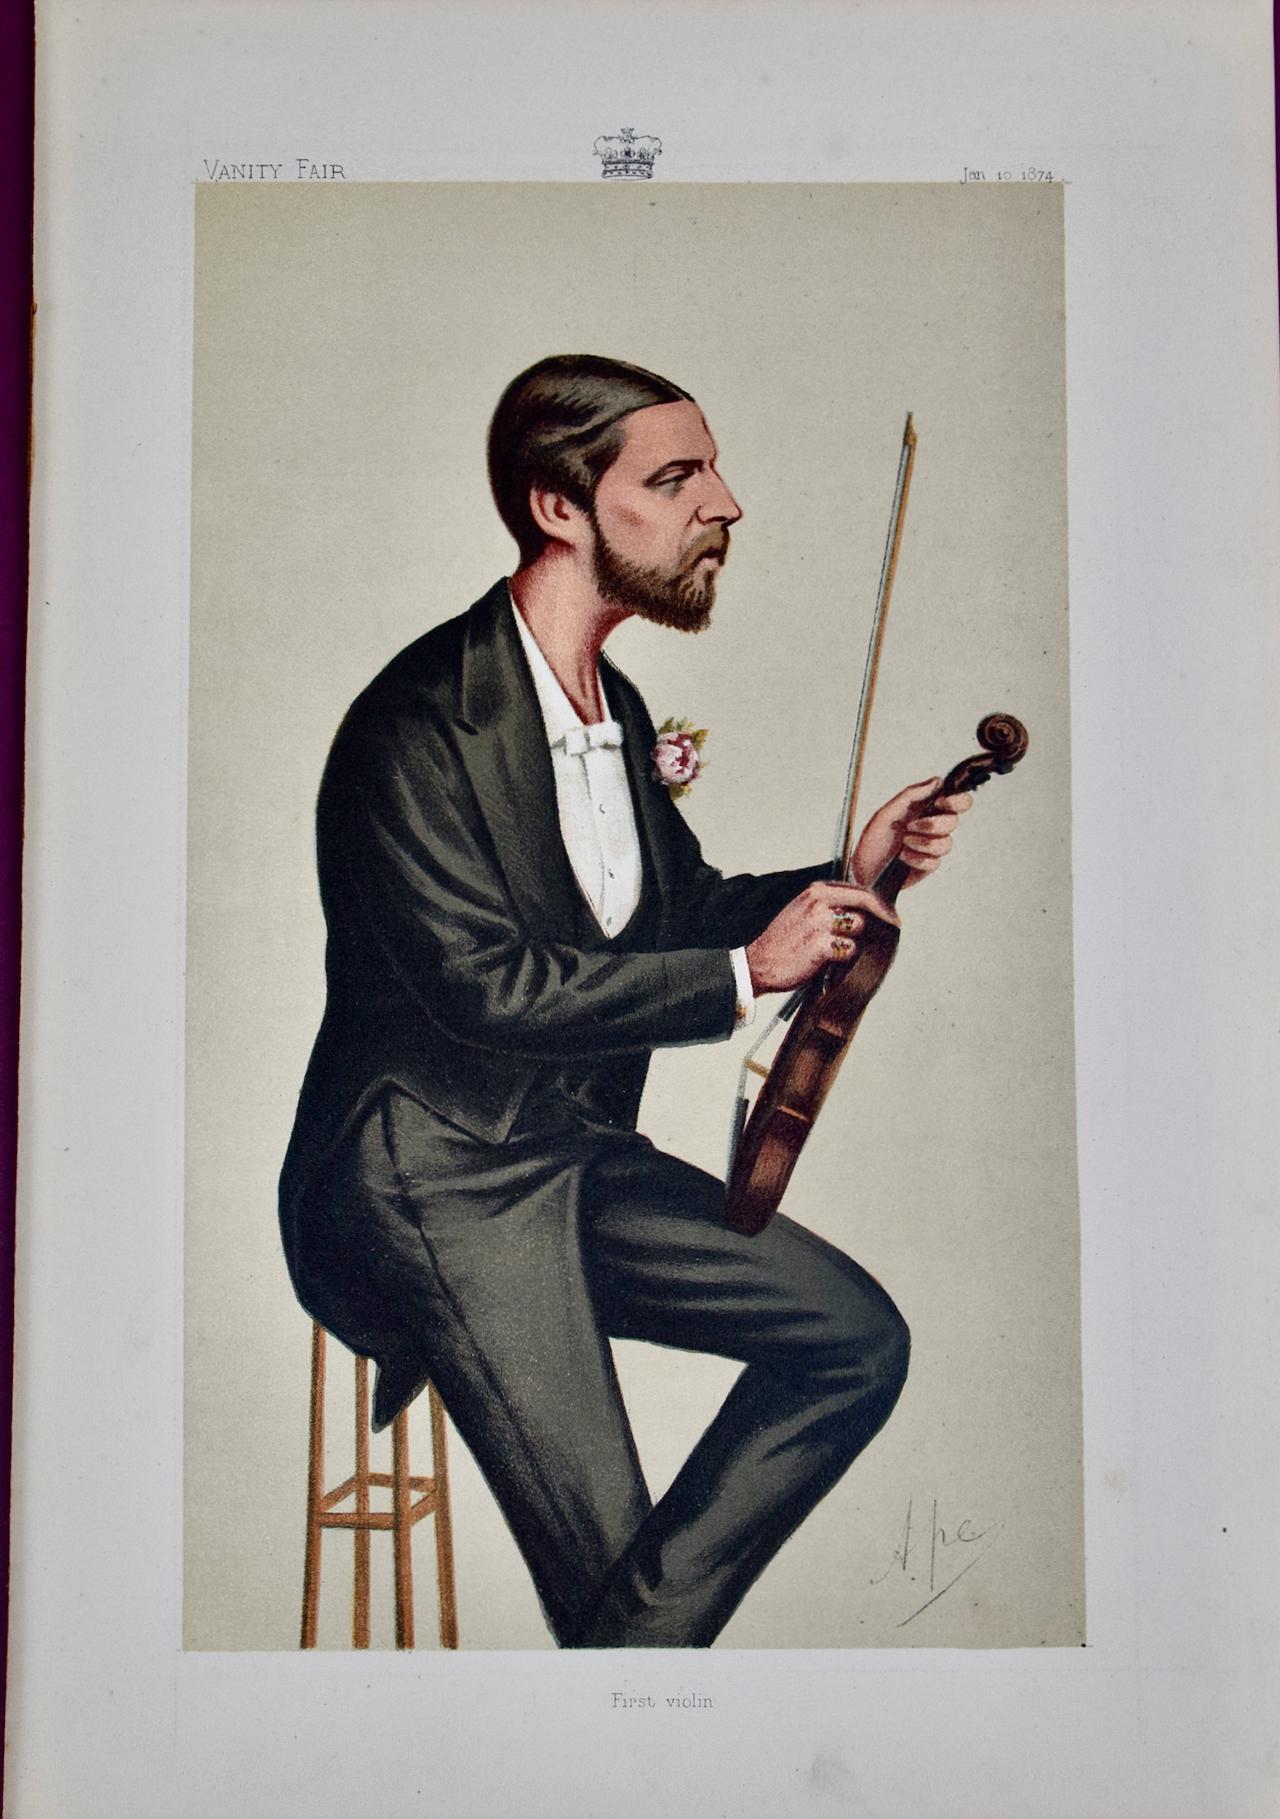 Carlo Pellegrini  Portrait Print - 1st Violin Duke of Edinburgh: 19th C. Vanity Fair Caricature by Ape (Pellegrini)